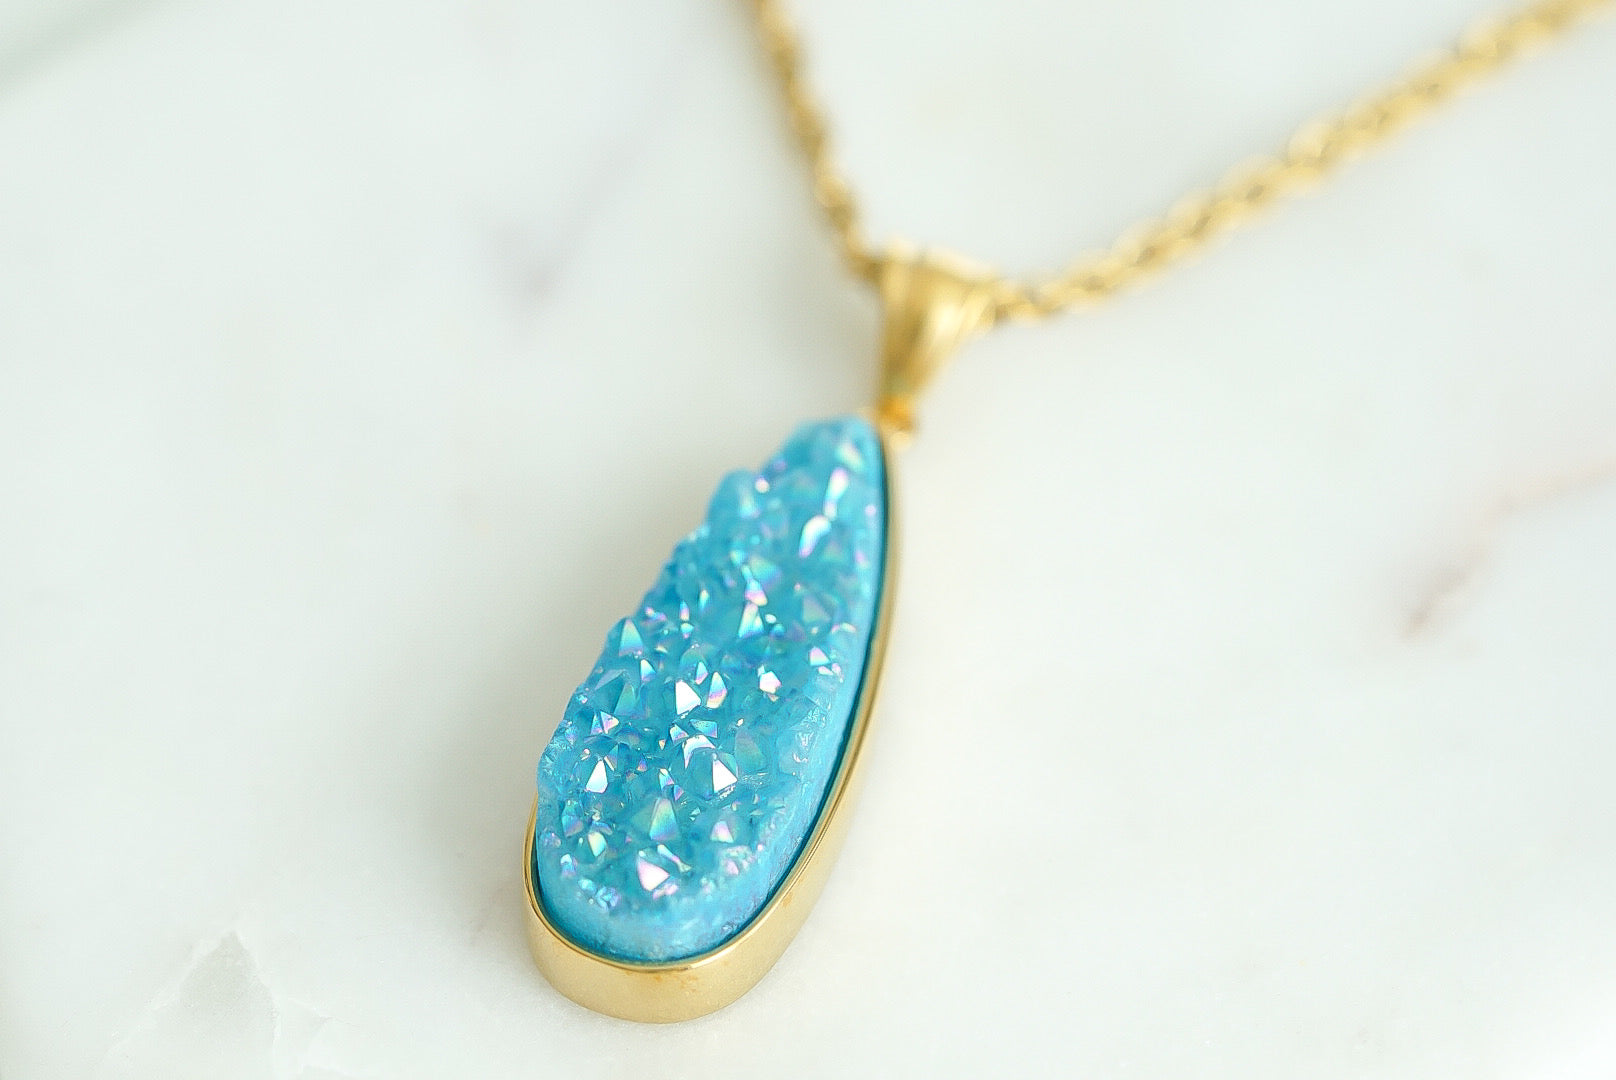 Druzy Collection - Azure Quartz Drop Necklace fine designer jewelry for men and women